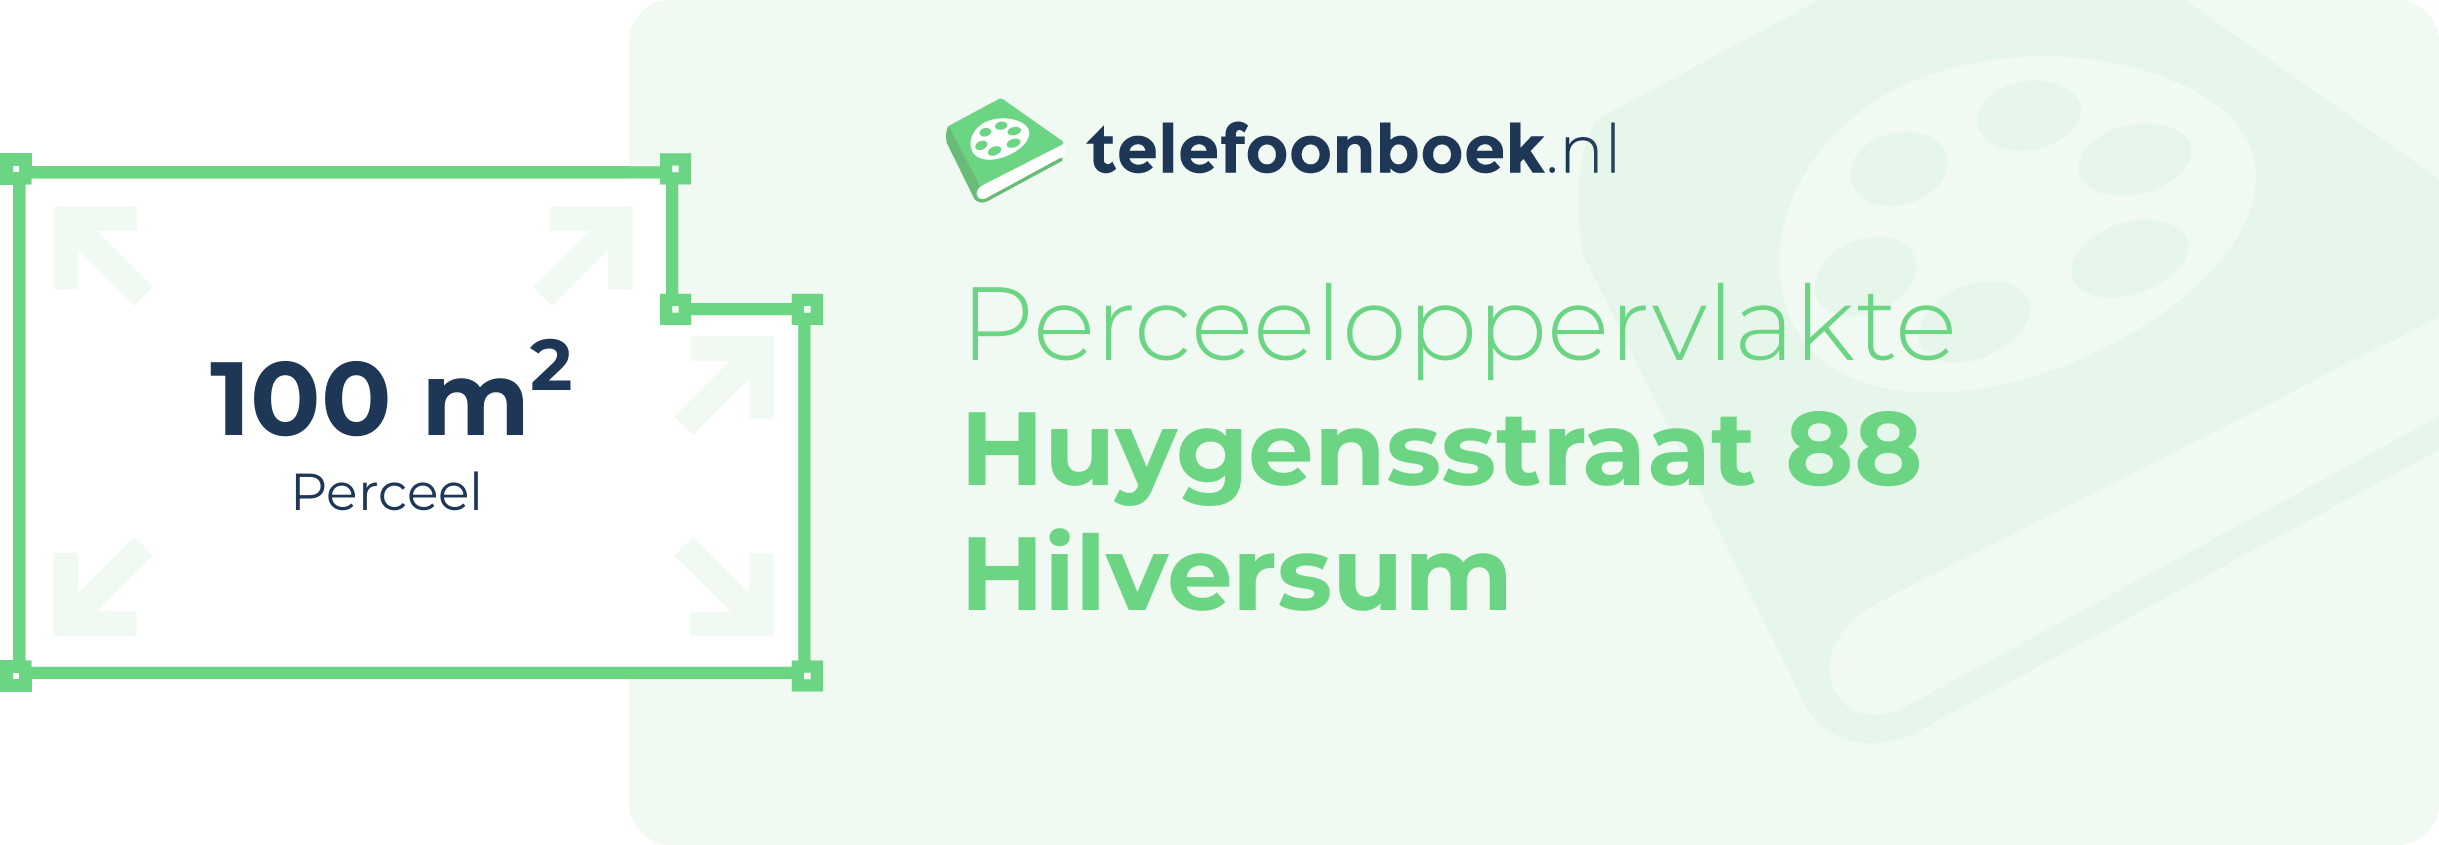 Perceeloppervlakte Huygensstraat 88 Hilversum